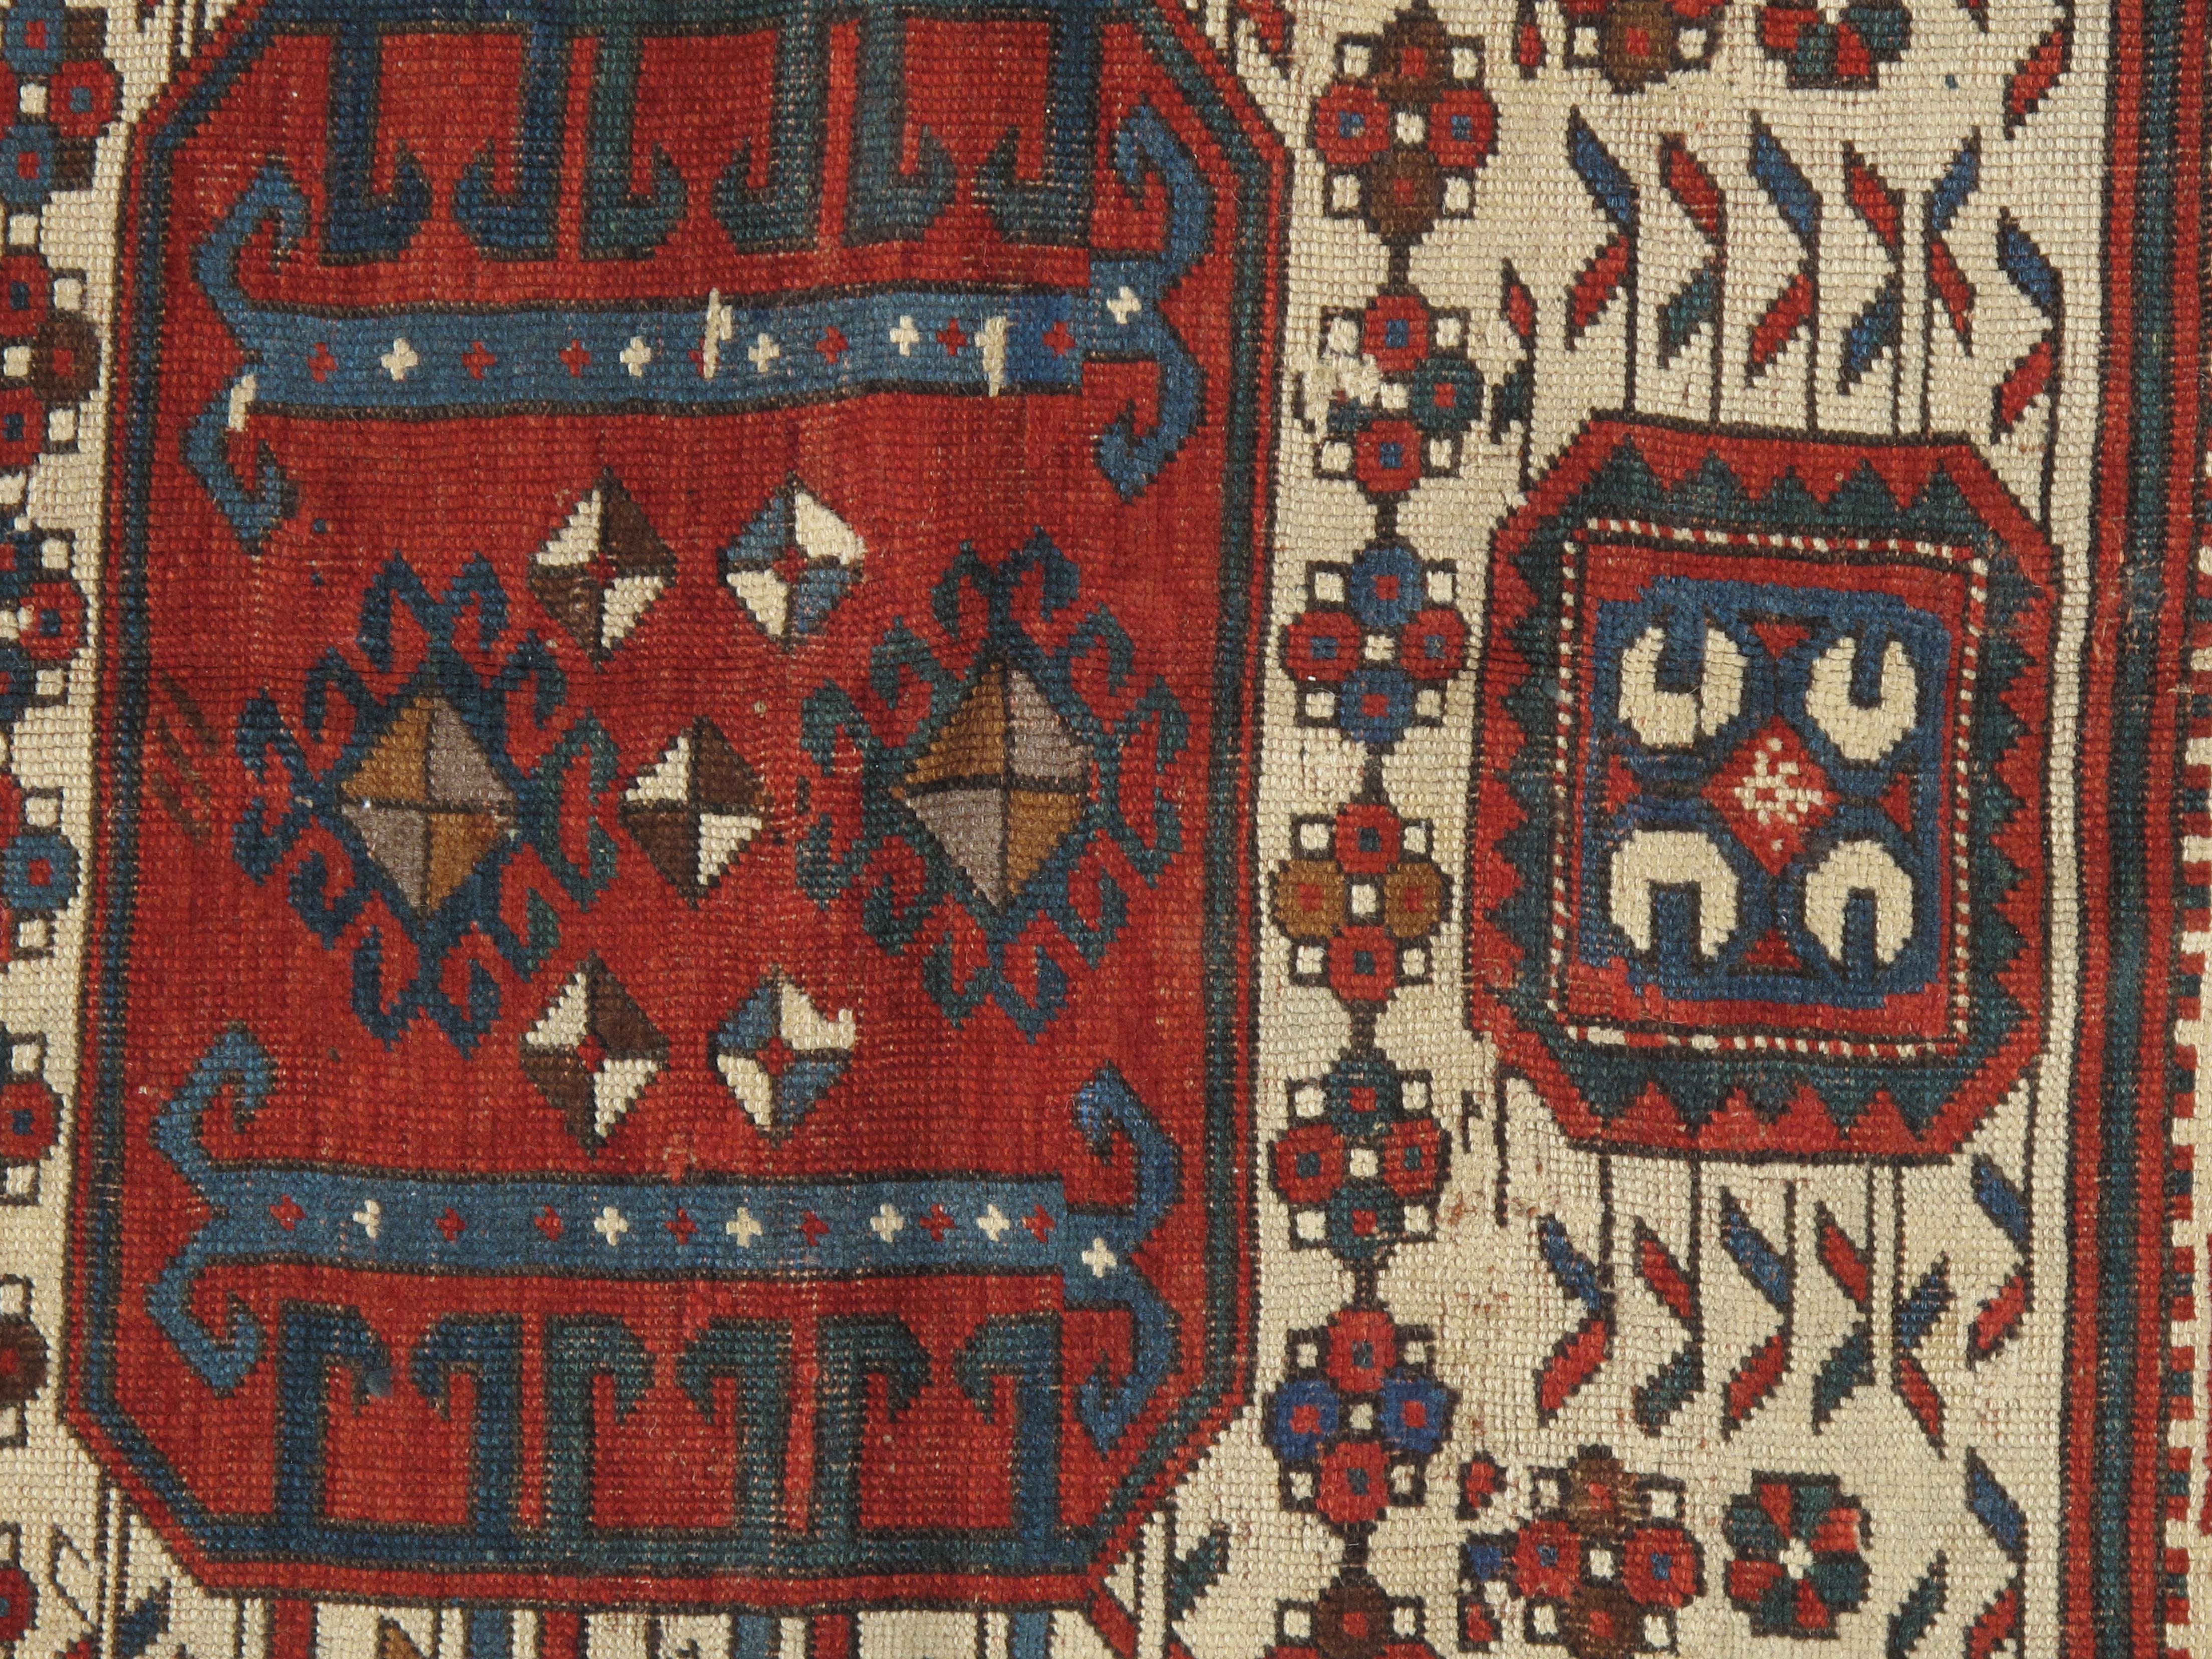 Antique Karachov Kazak Carpet, Handmade Wool, Rust, Ivory, Blue and Geometric For Sale 4